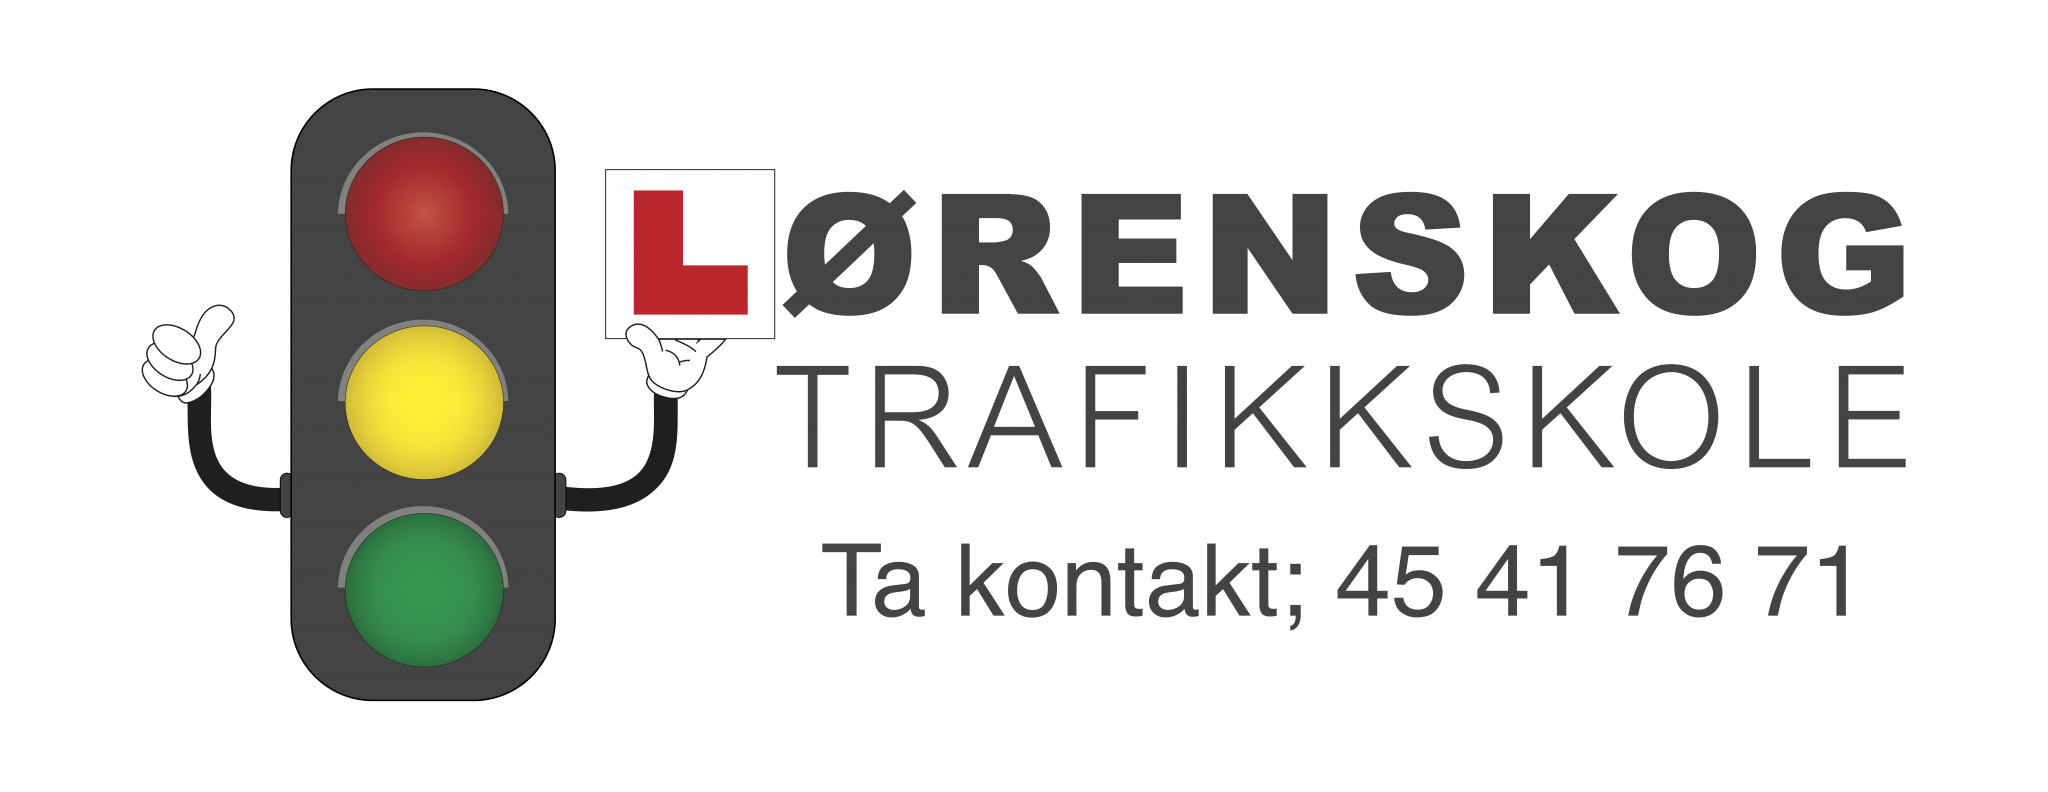 lorenskog-trafikkskole_2-5x1m-2